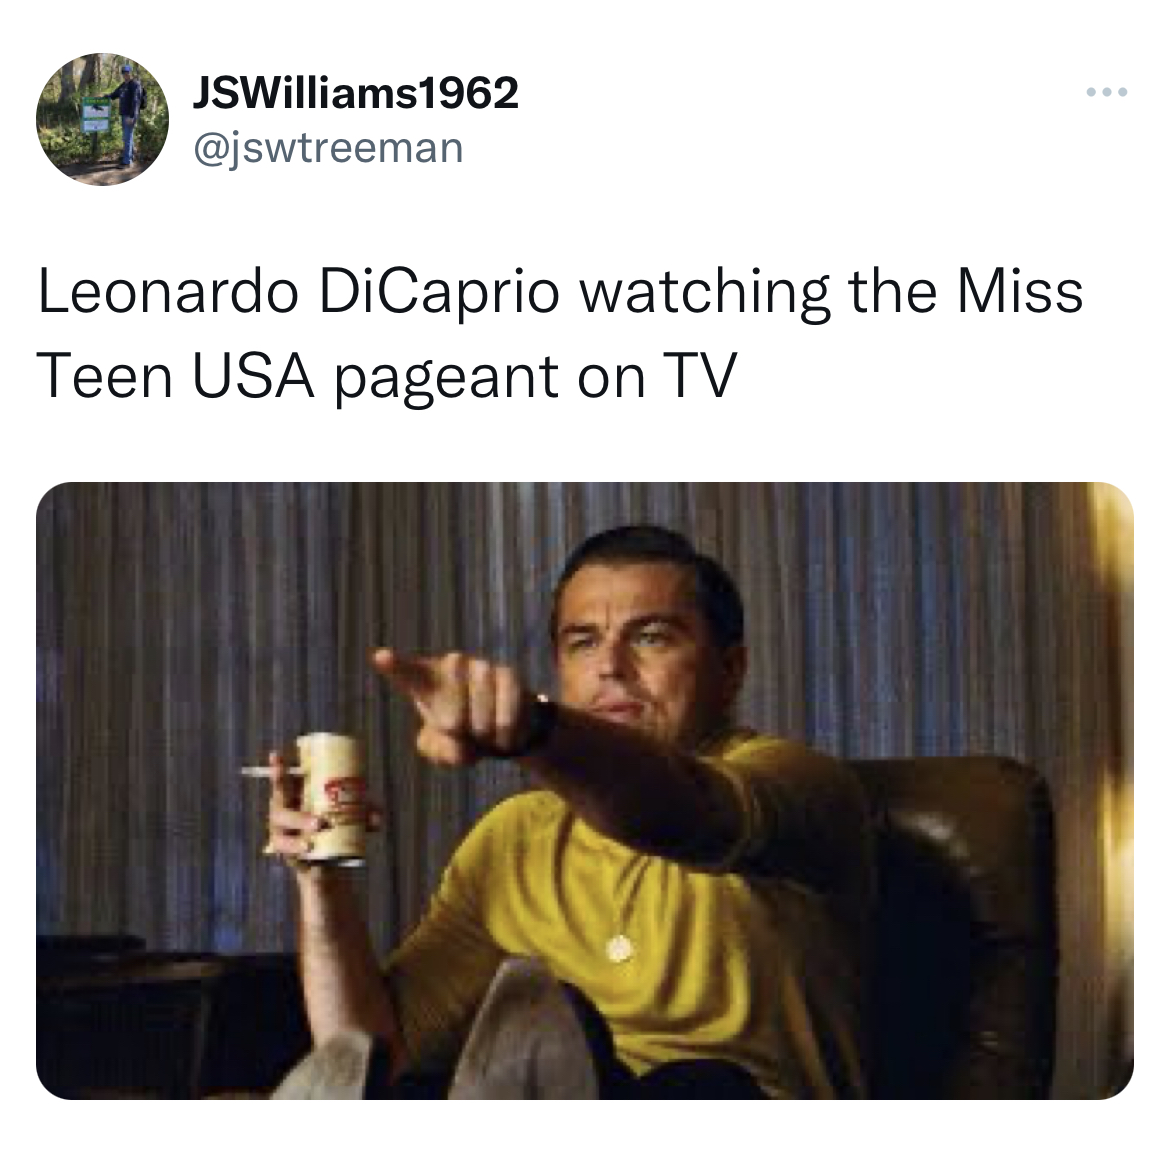 Untamed Tweets - human behavior - JSWilliams1962 Leonardo DiCaprio watching the Miss Teen Usa pageant on Tv